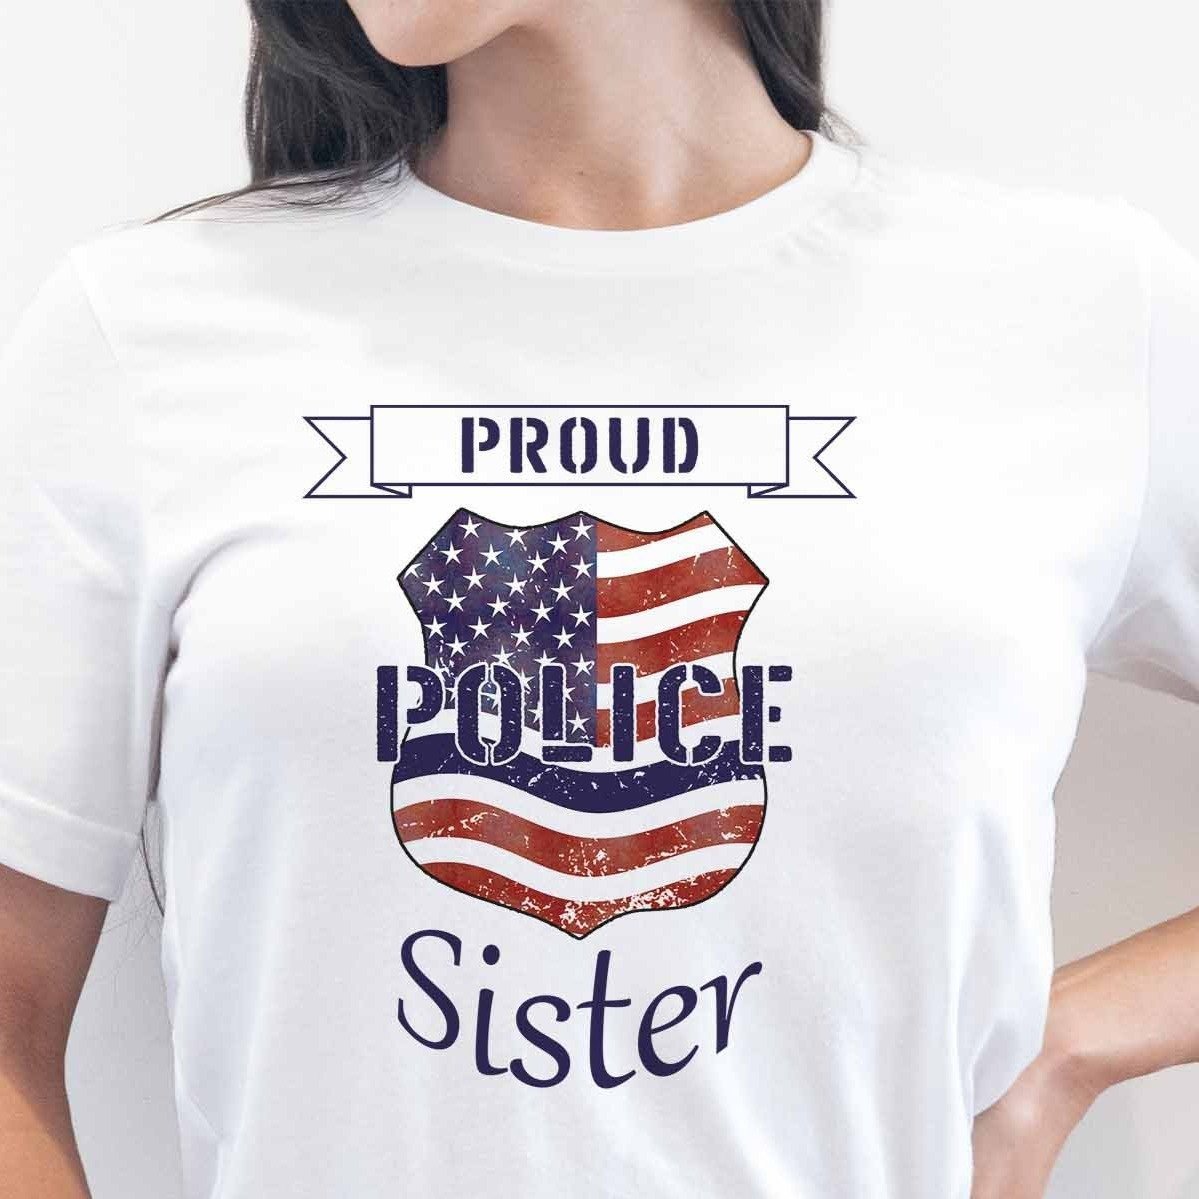 Proud Police Sister - My Custom Tee Party